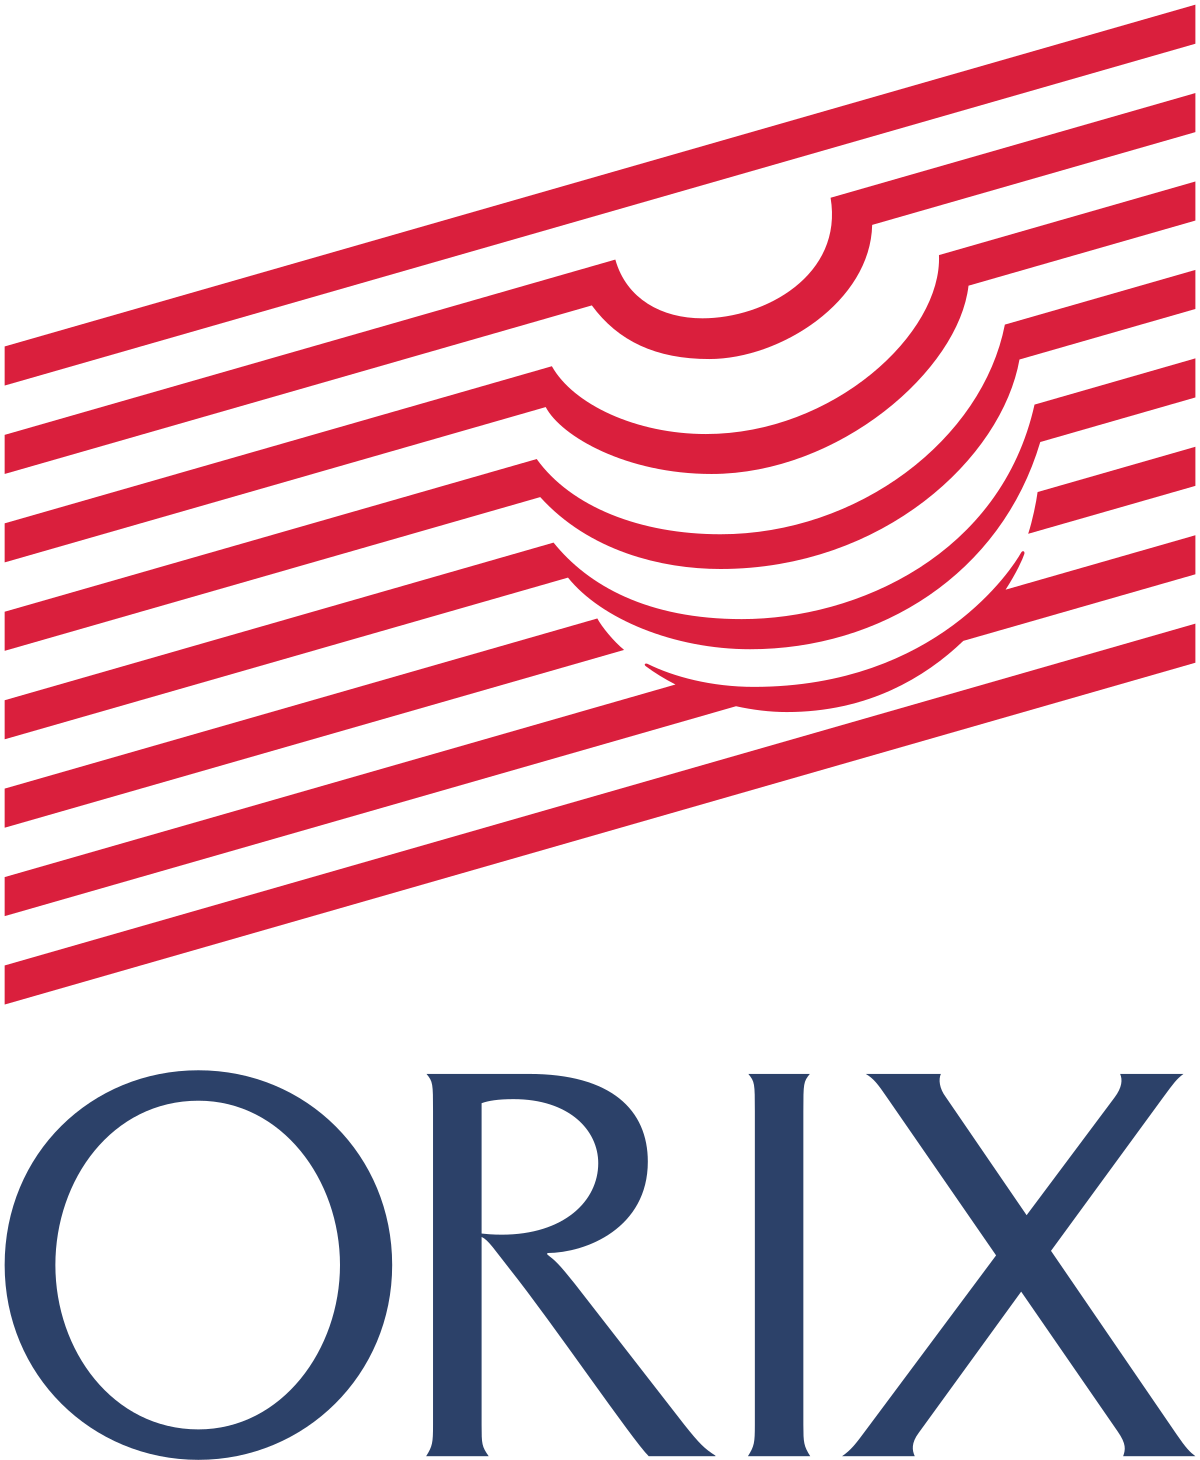 Metro Orix